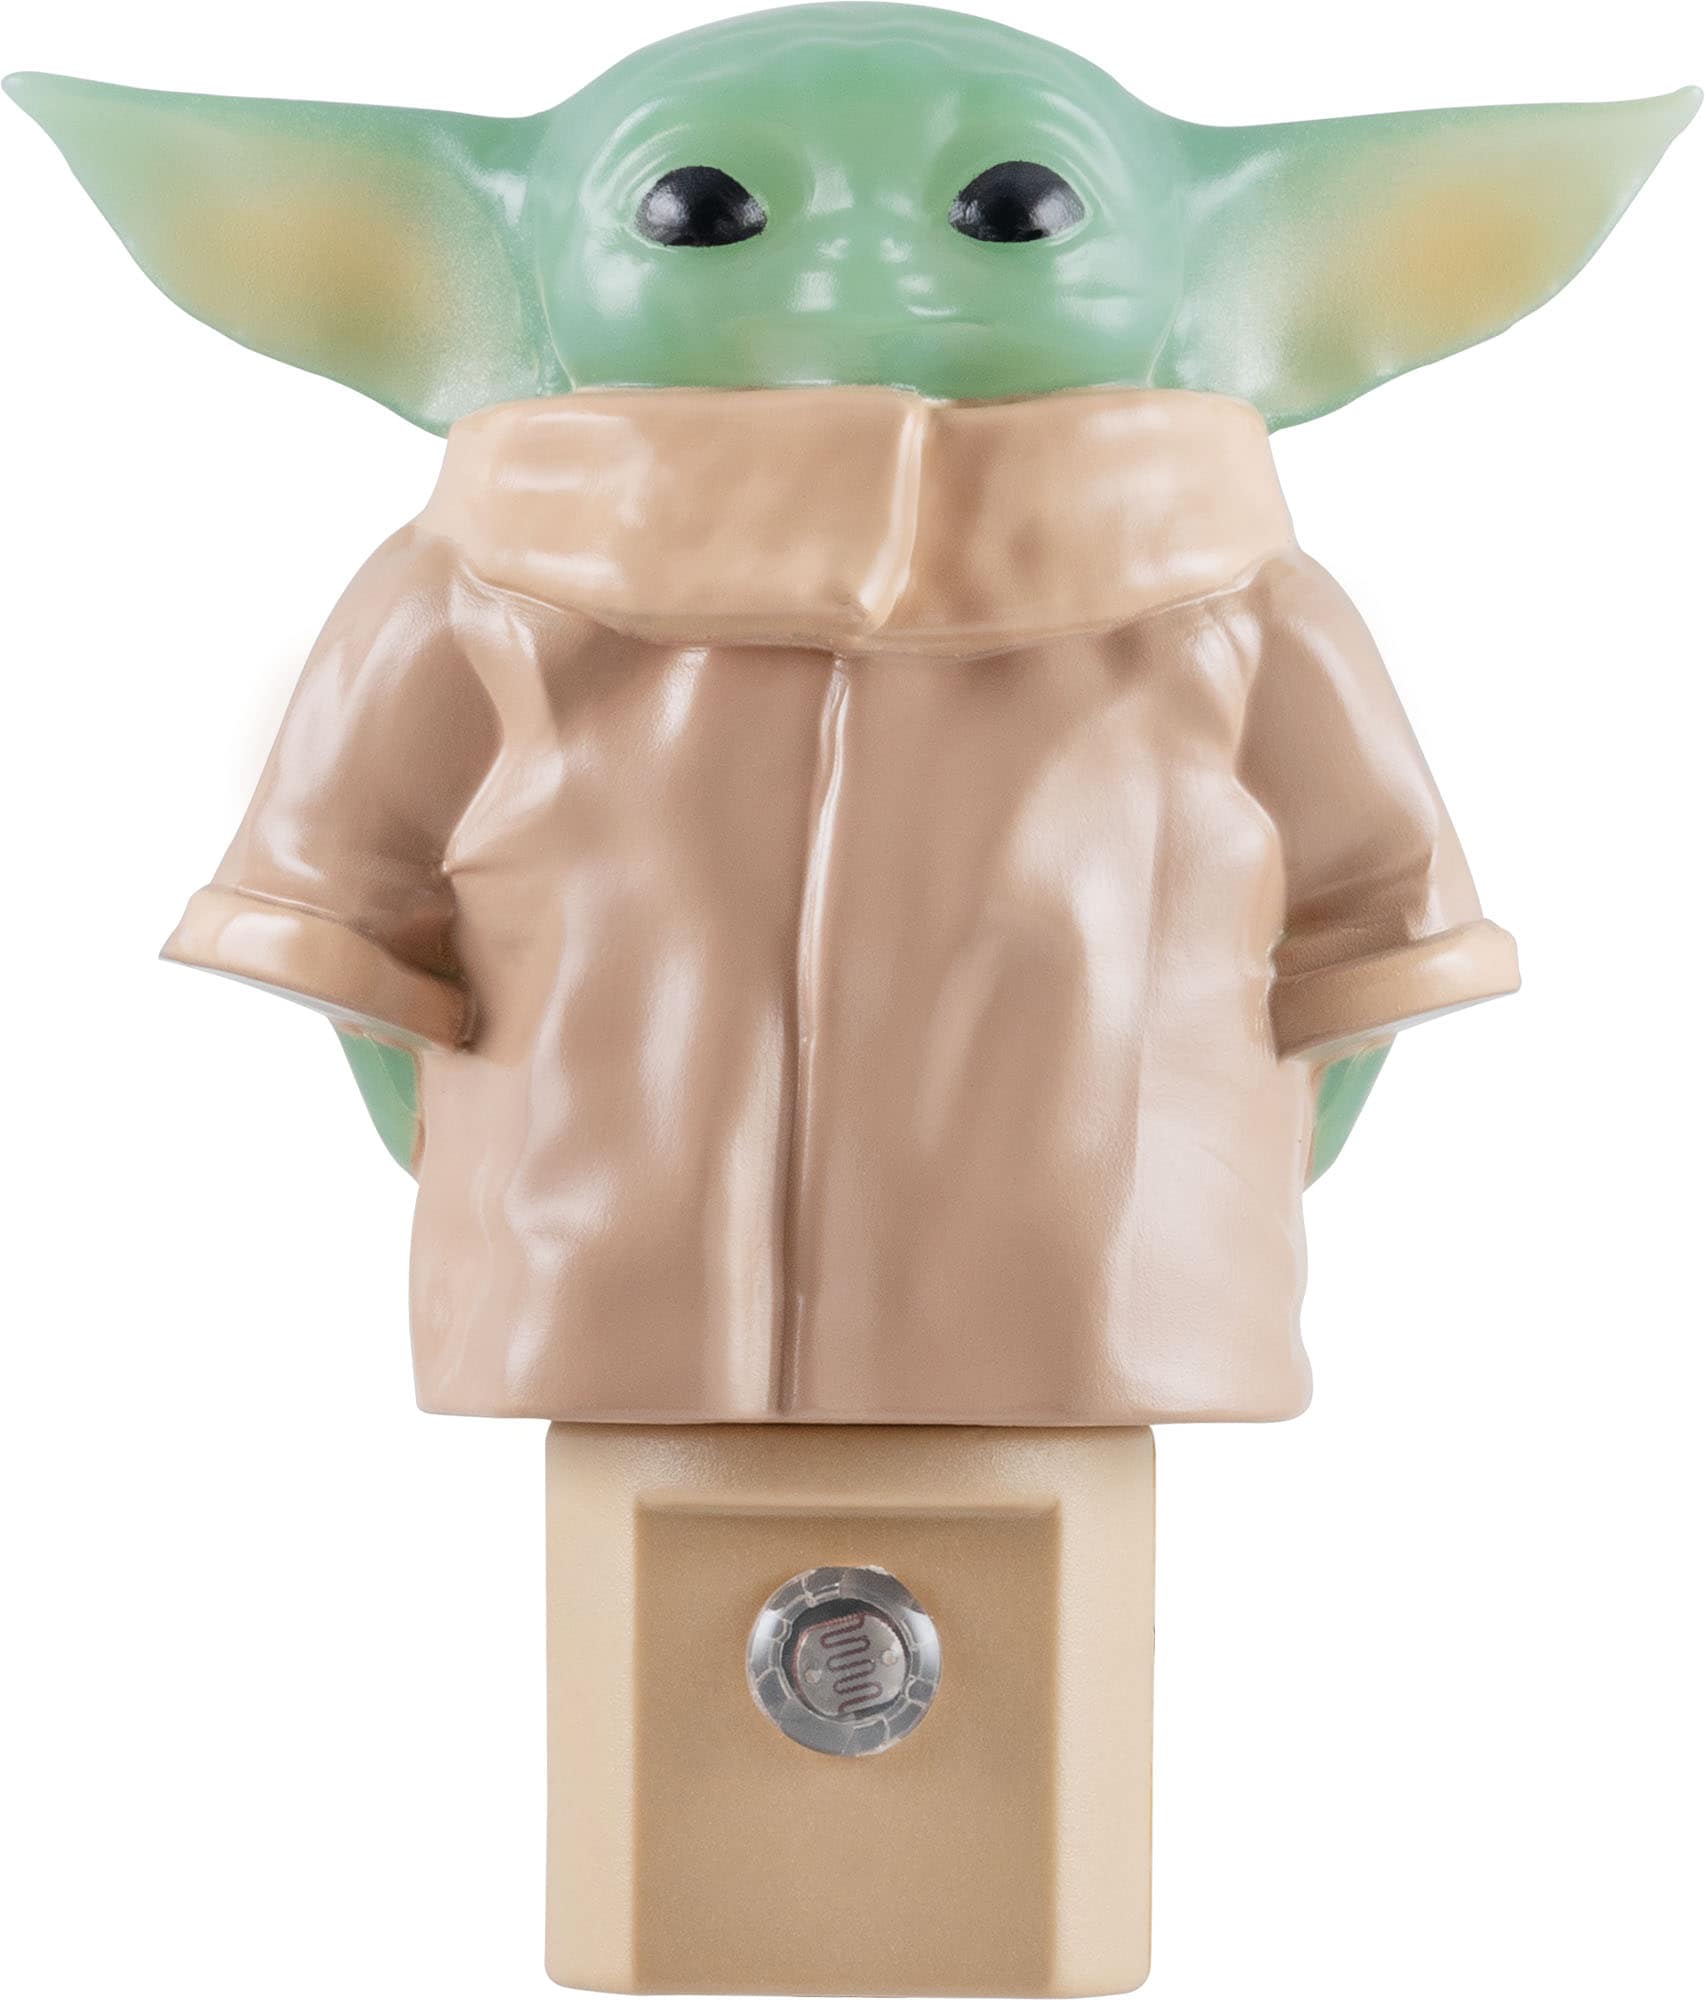 Mandalorian Star Wars Projectables LED Night Light Disney Baby Yoda The  Child